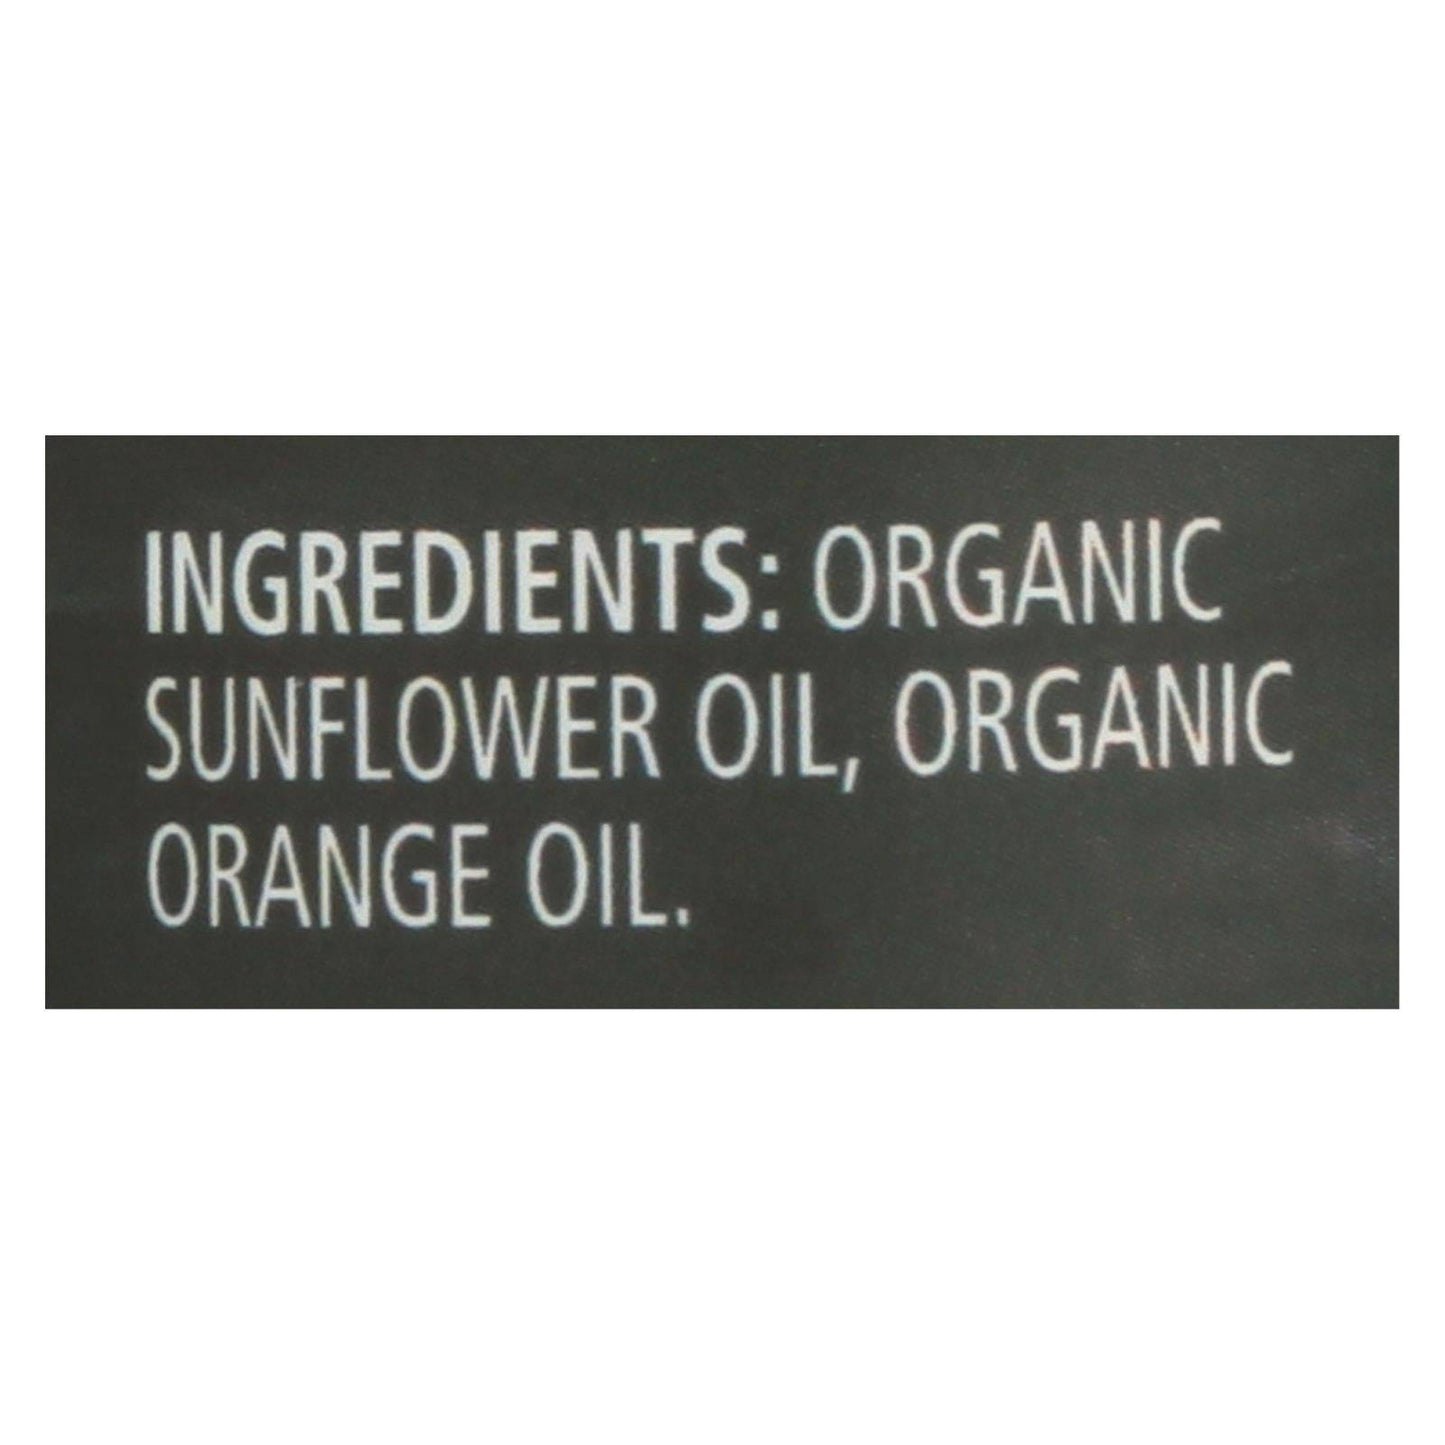 Buy Frontier Herb Orange Flavor - Organic - 2 Oz  at OnlyNaturals.us